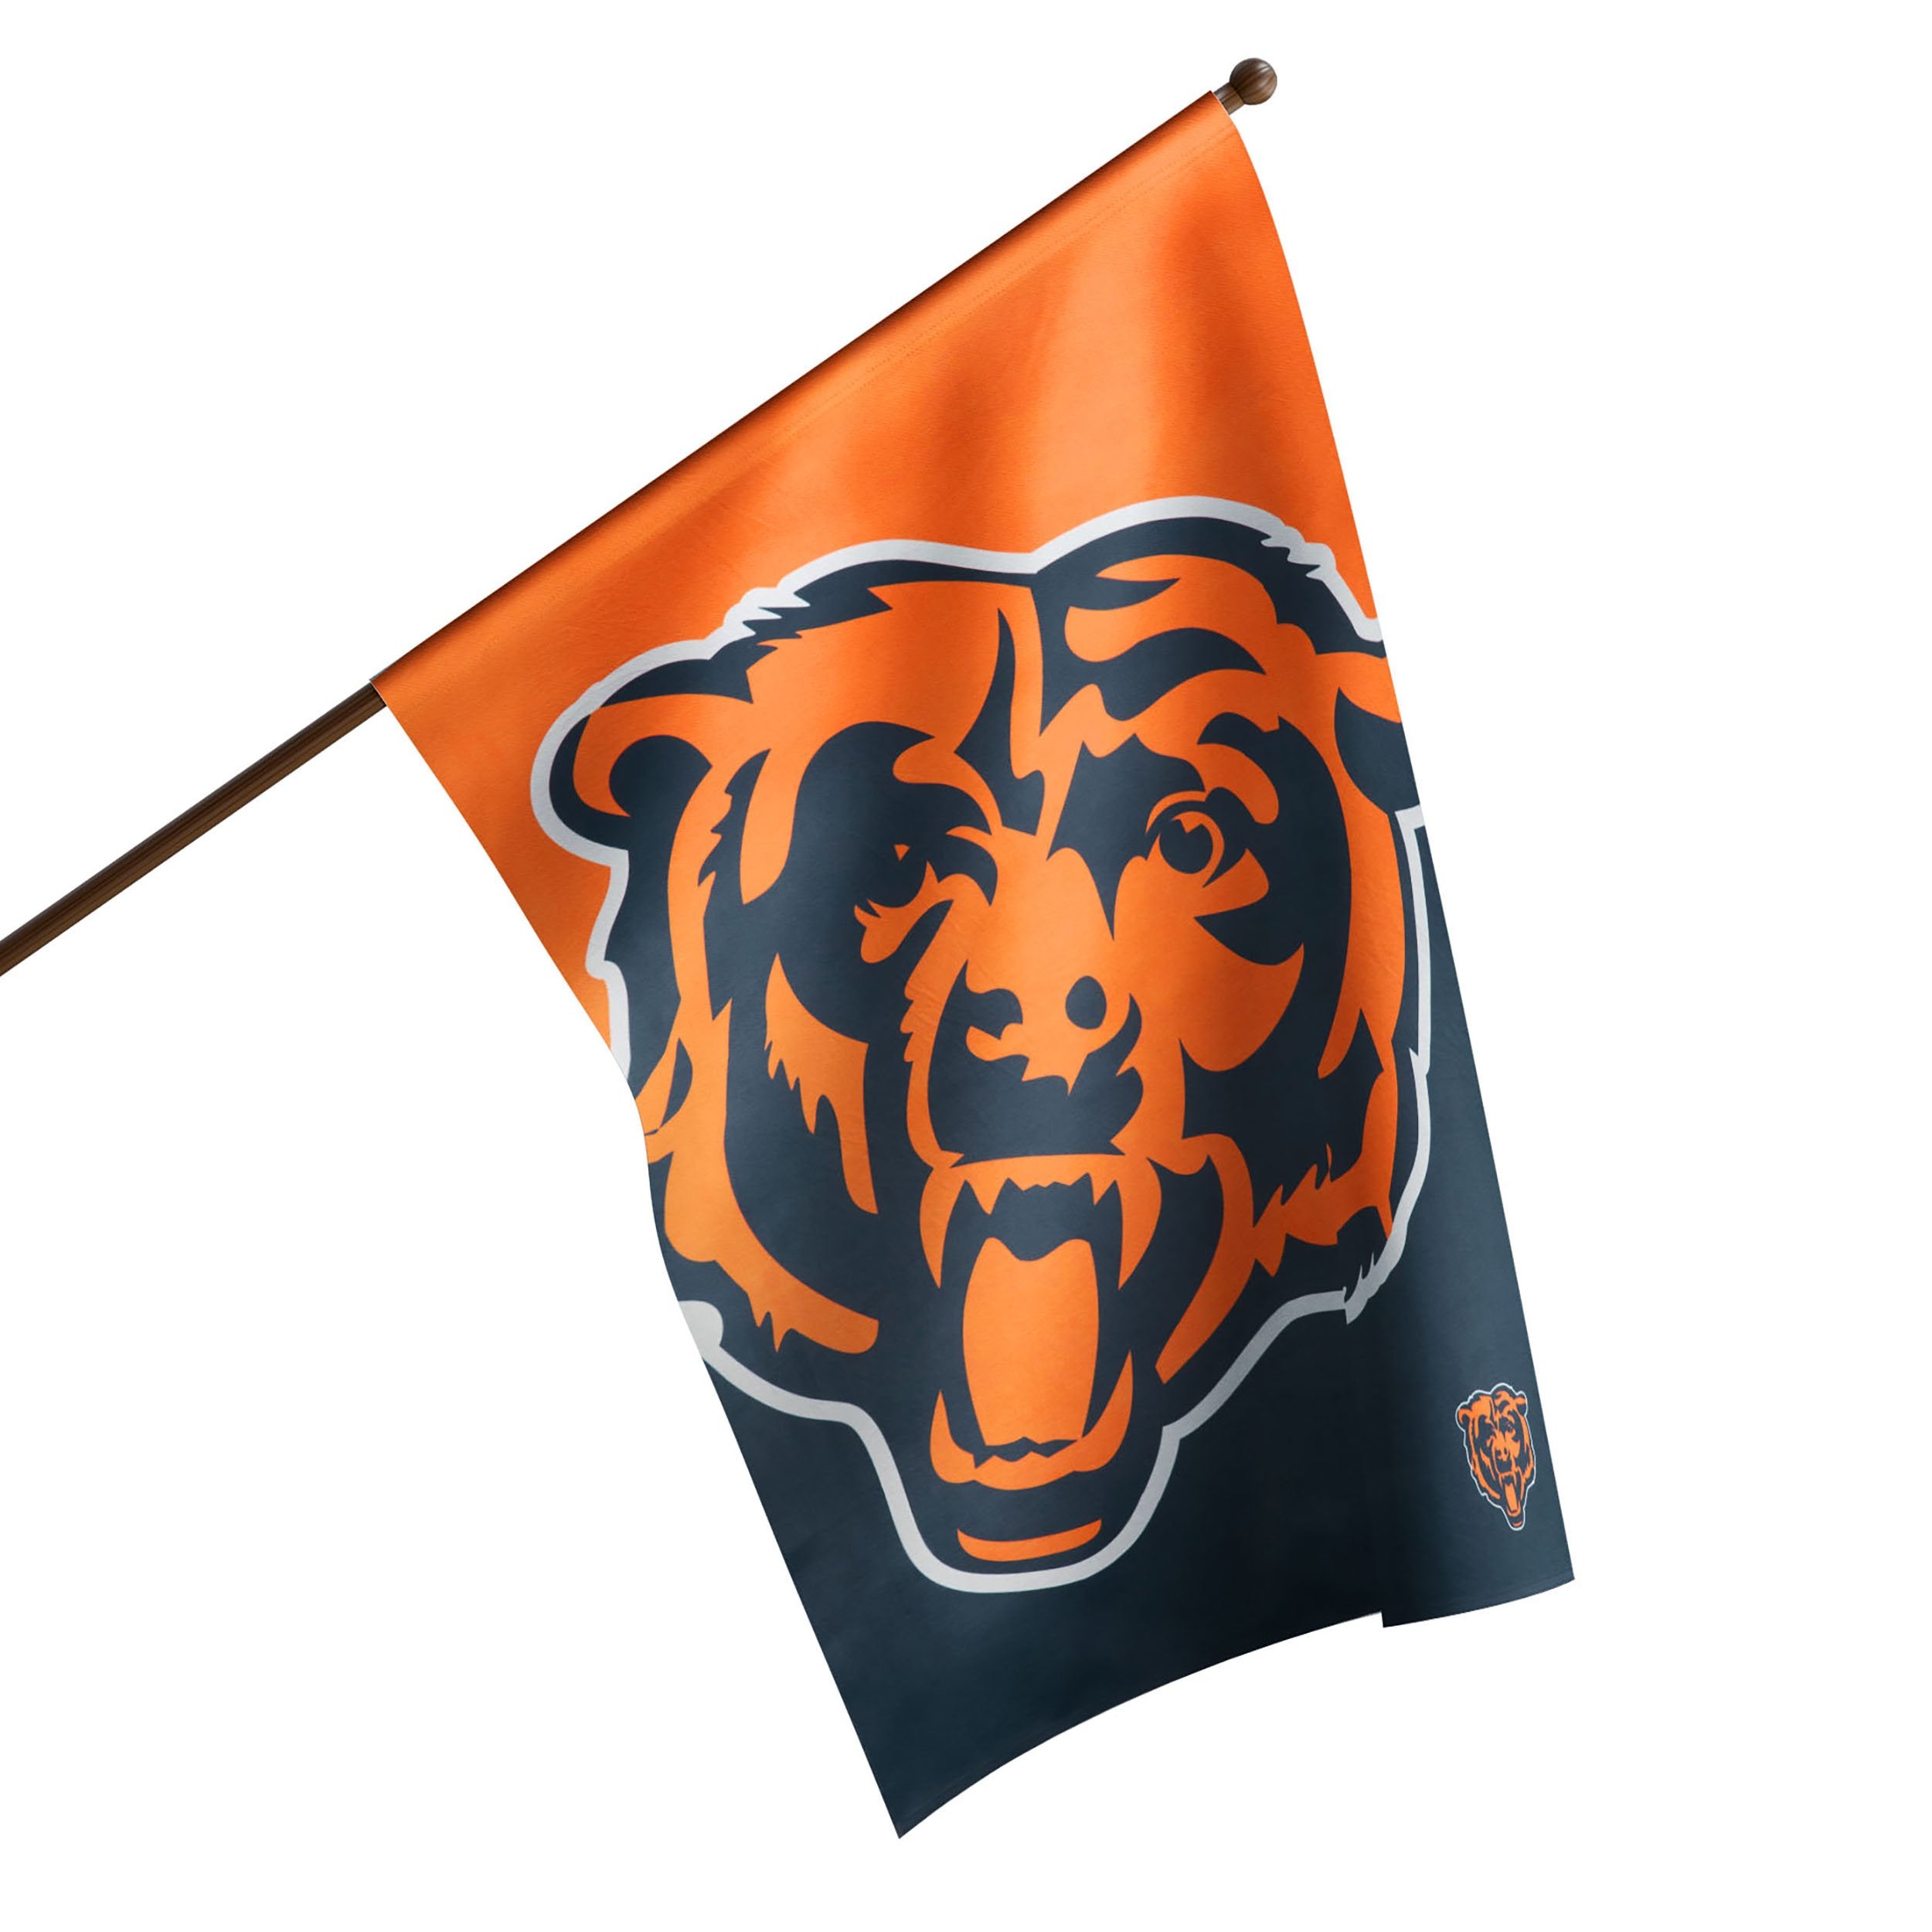 Bear Flag - San Francisco Giants